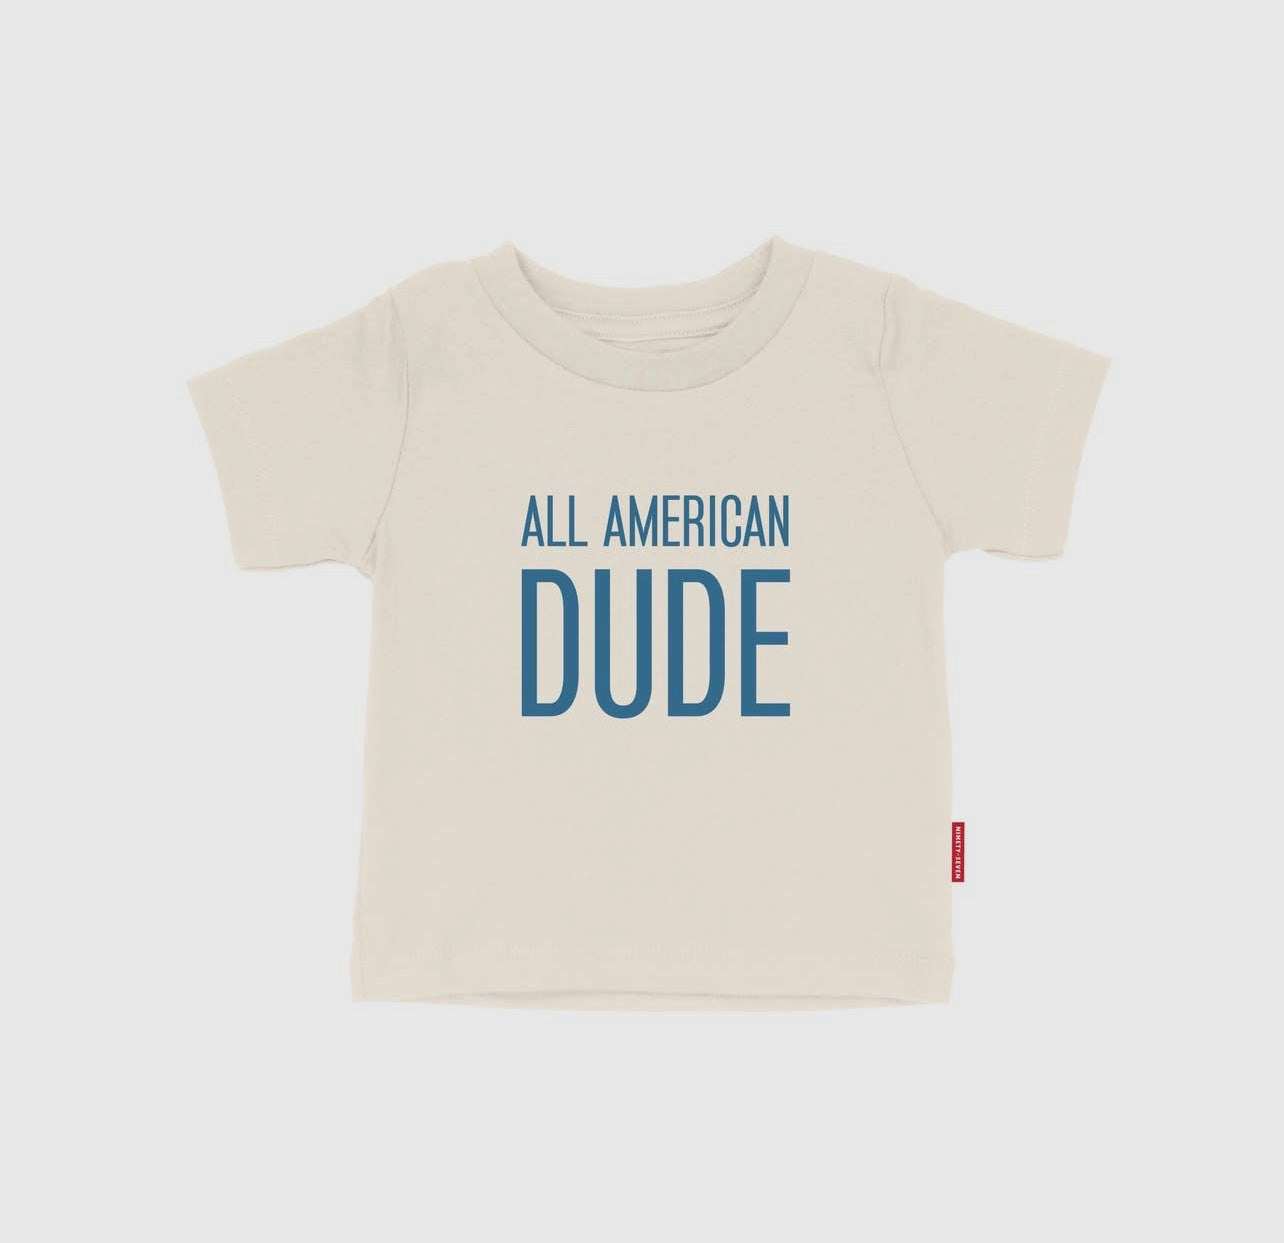 All American Dude Tee